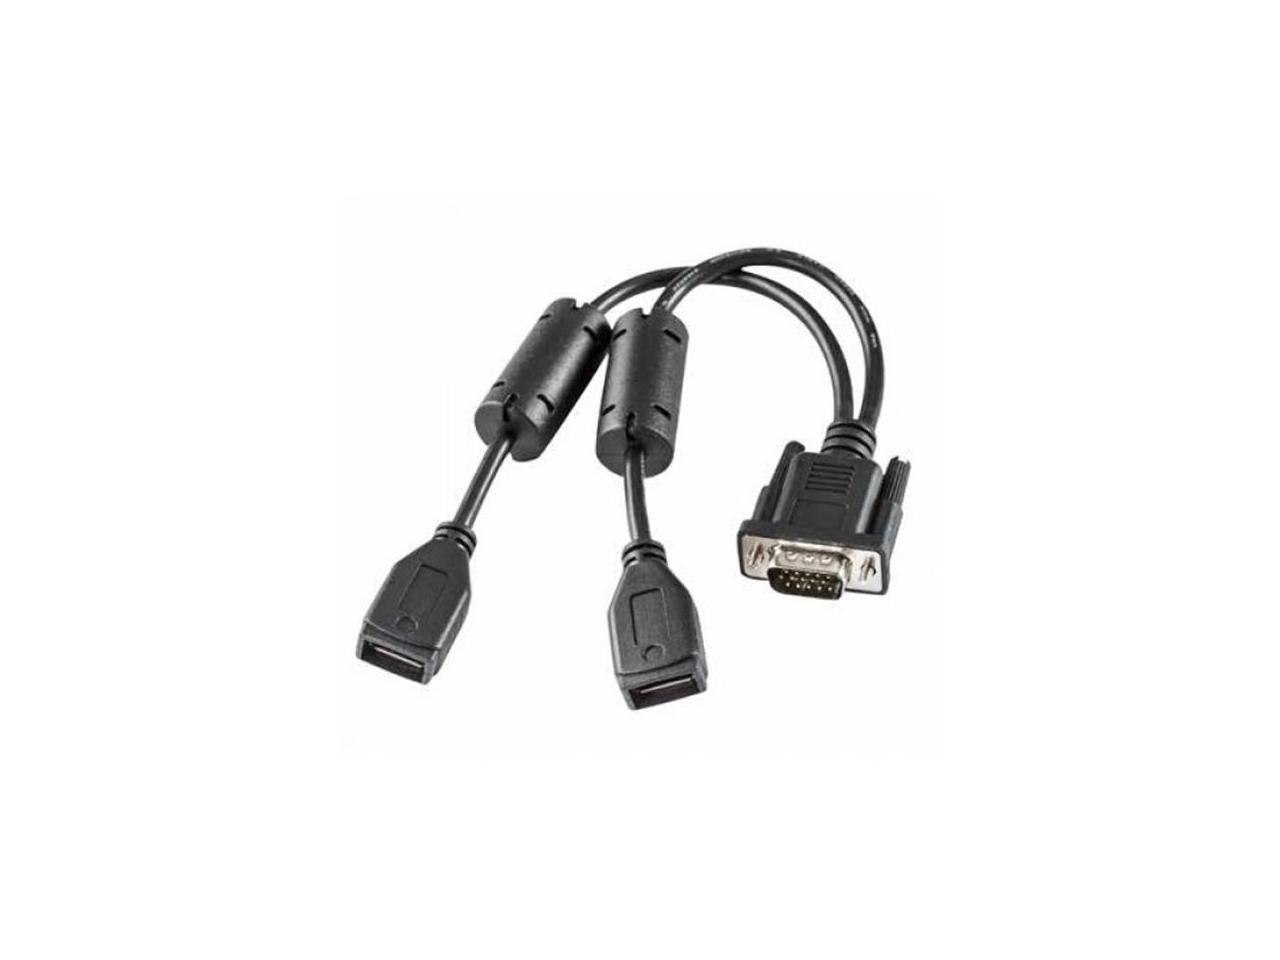 Honeywell USB Cable